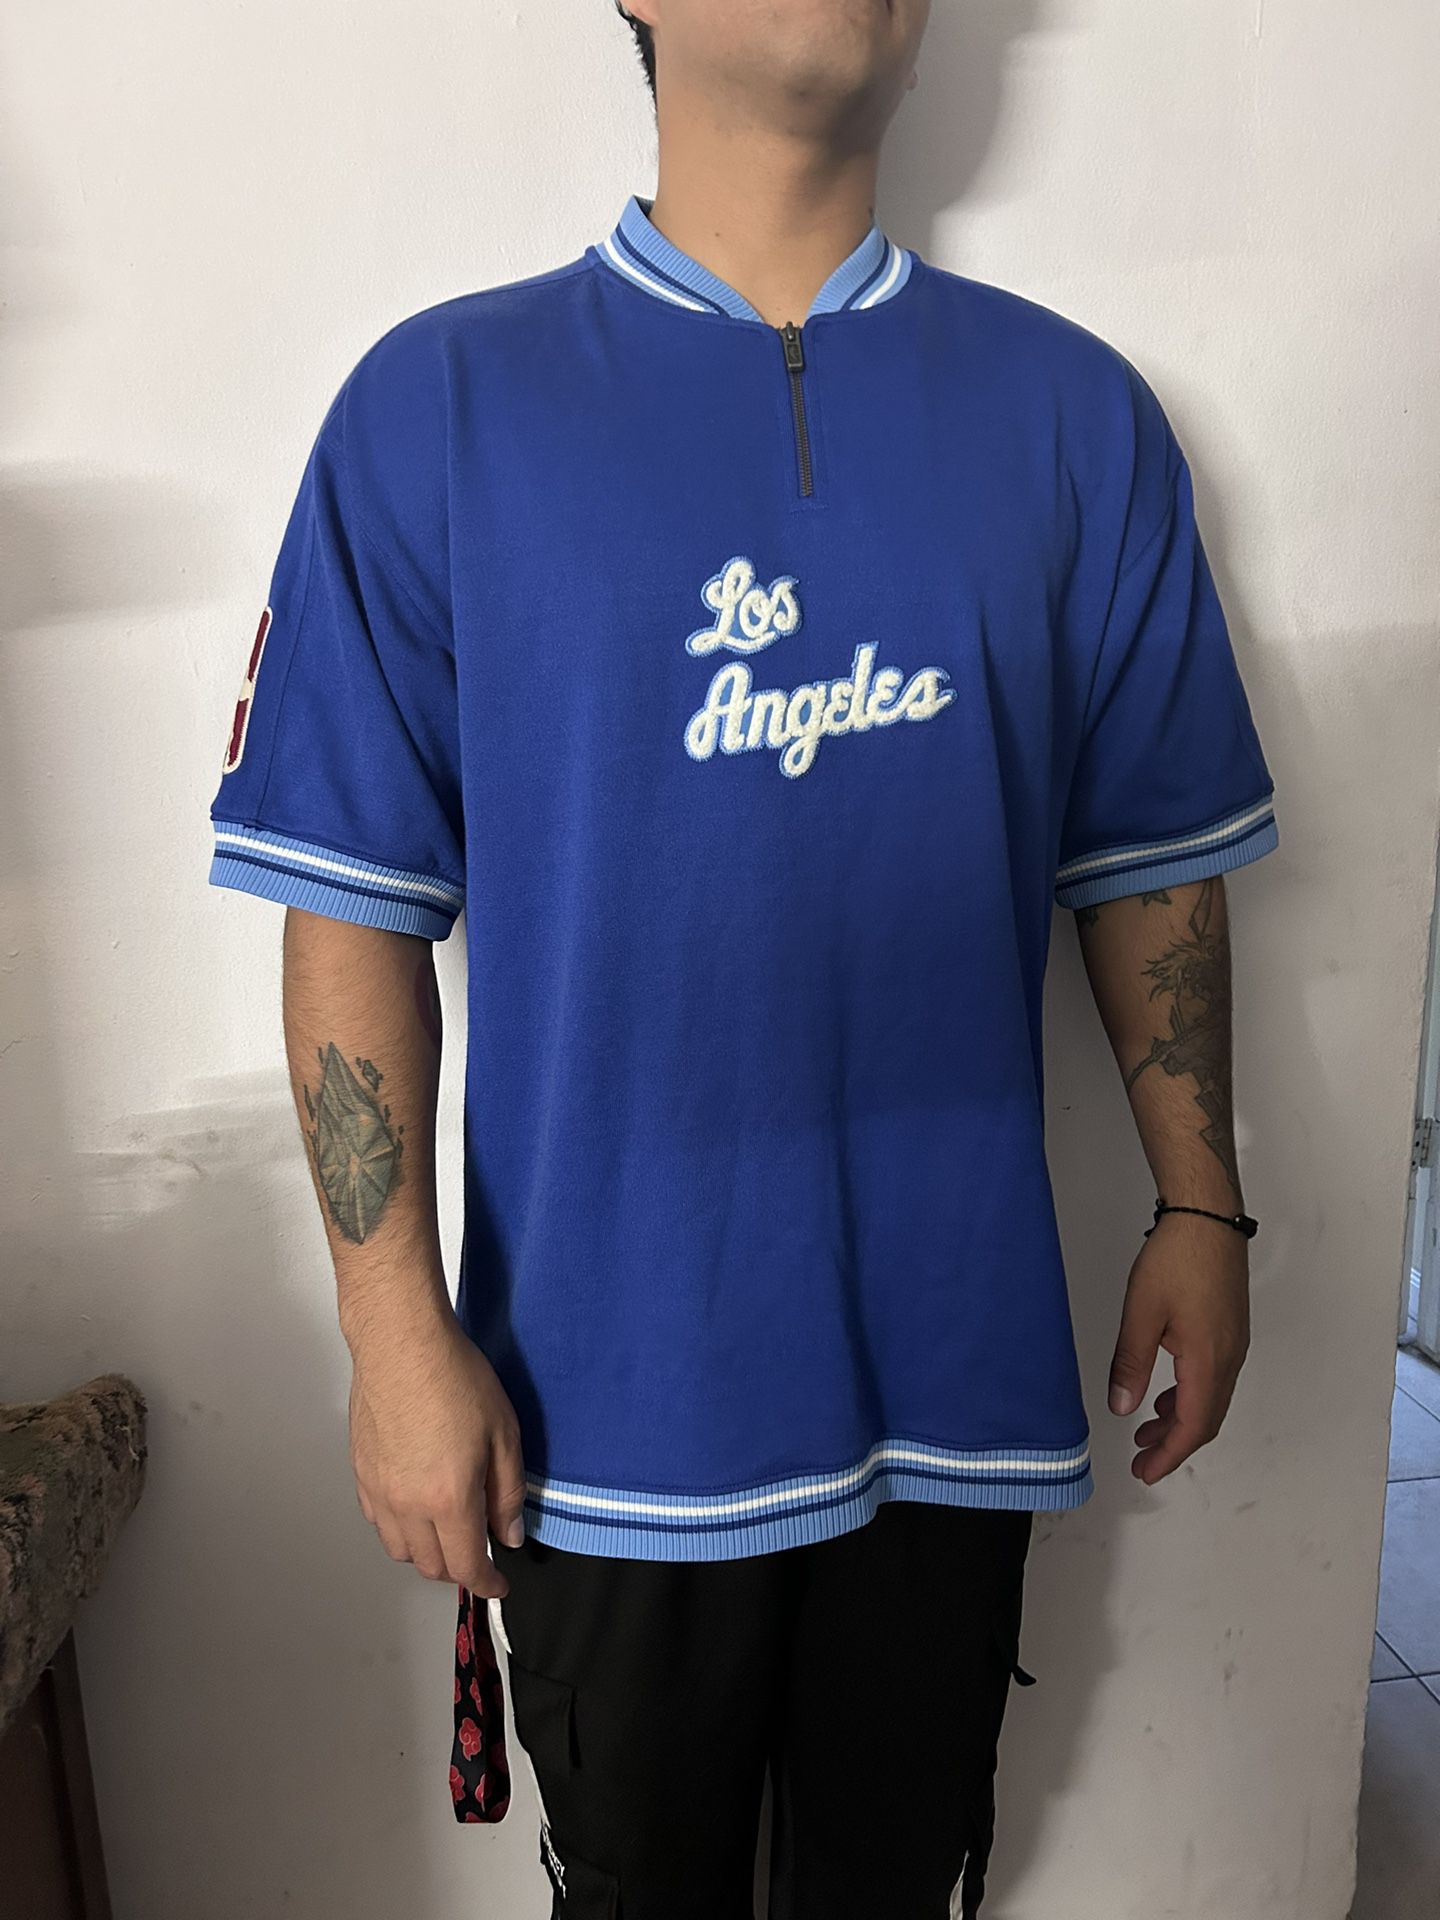 Los Angeles Shirt 